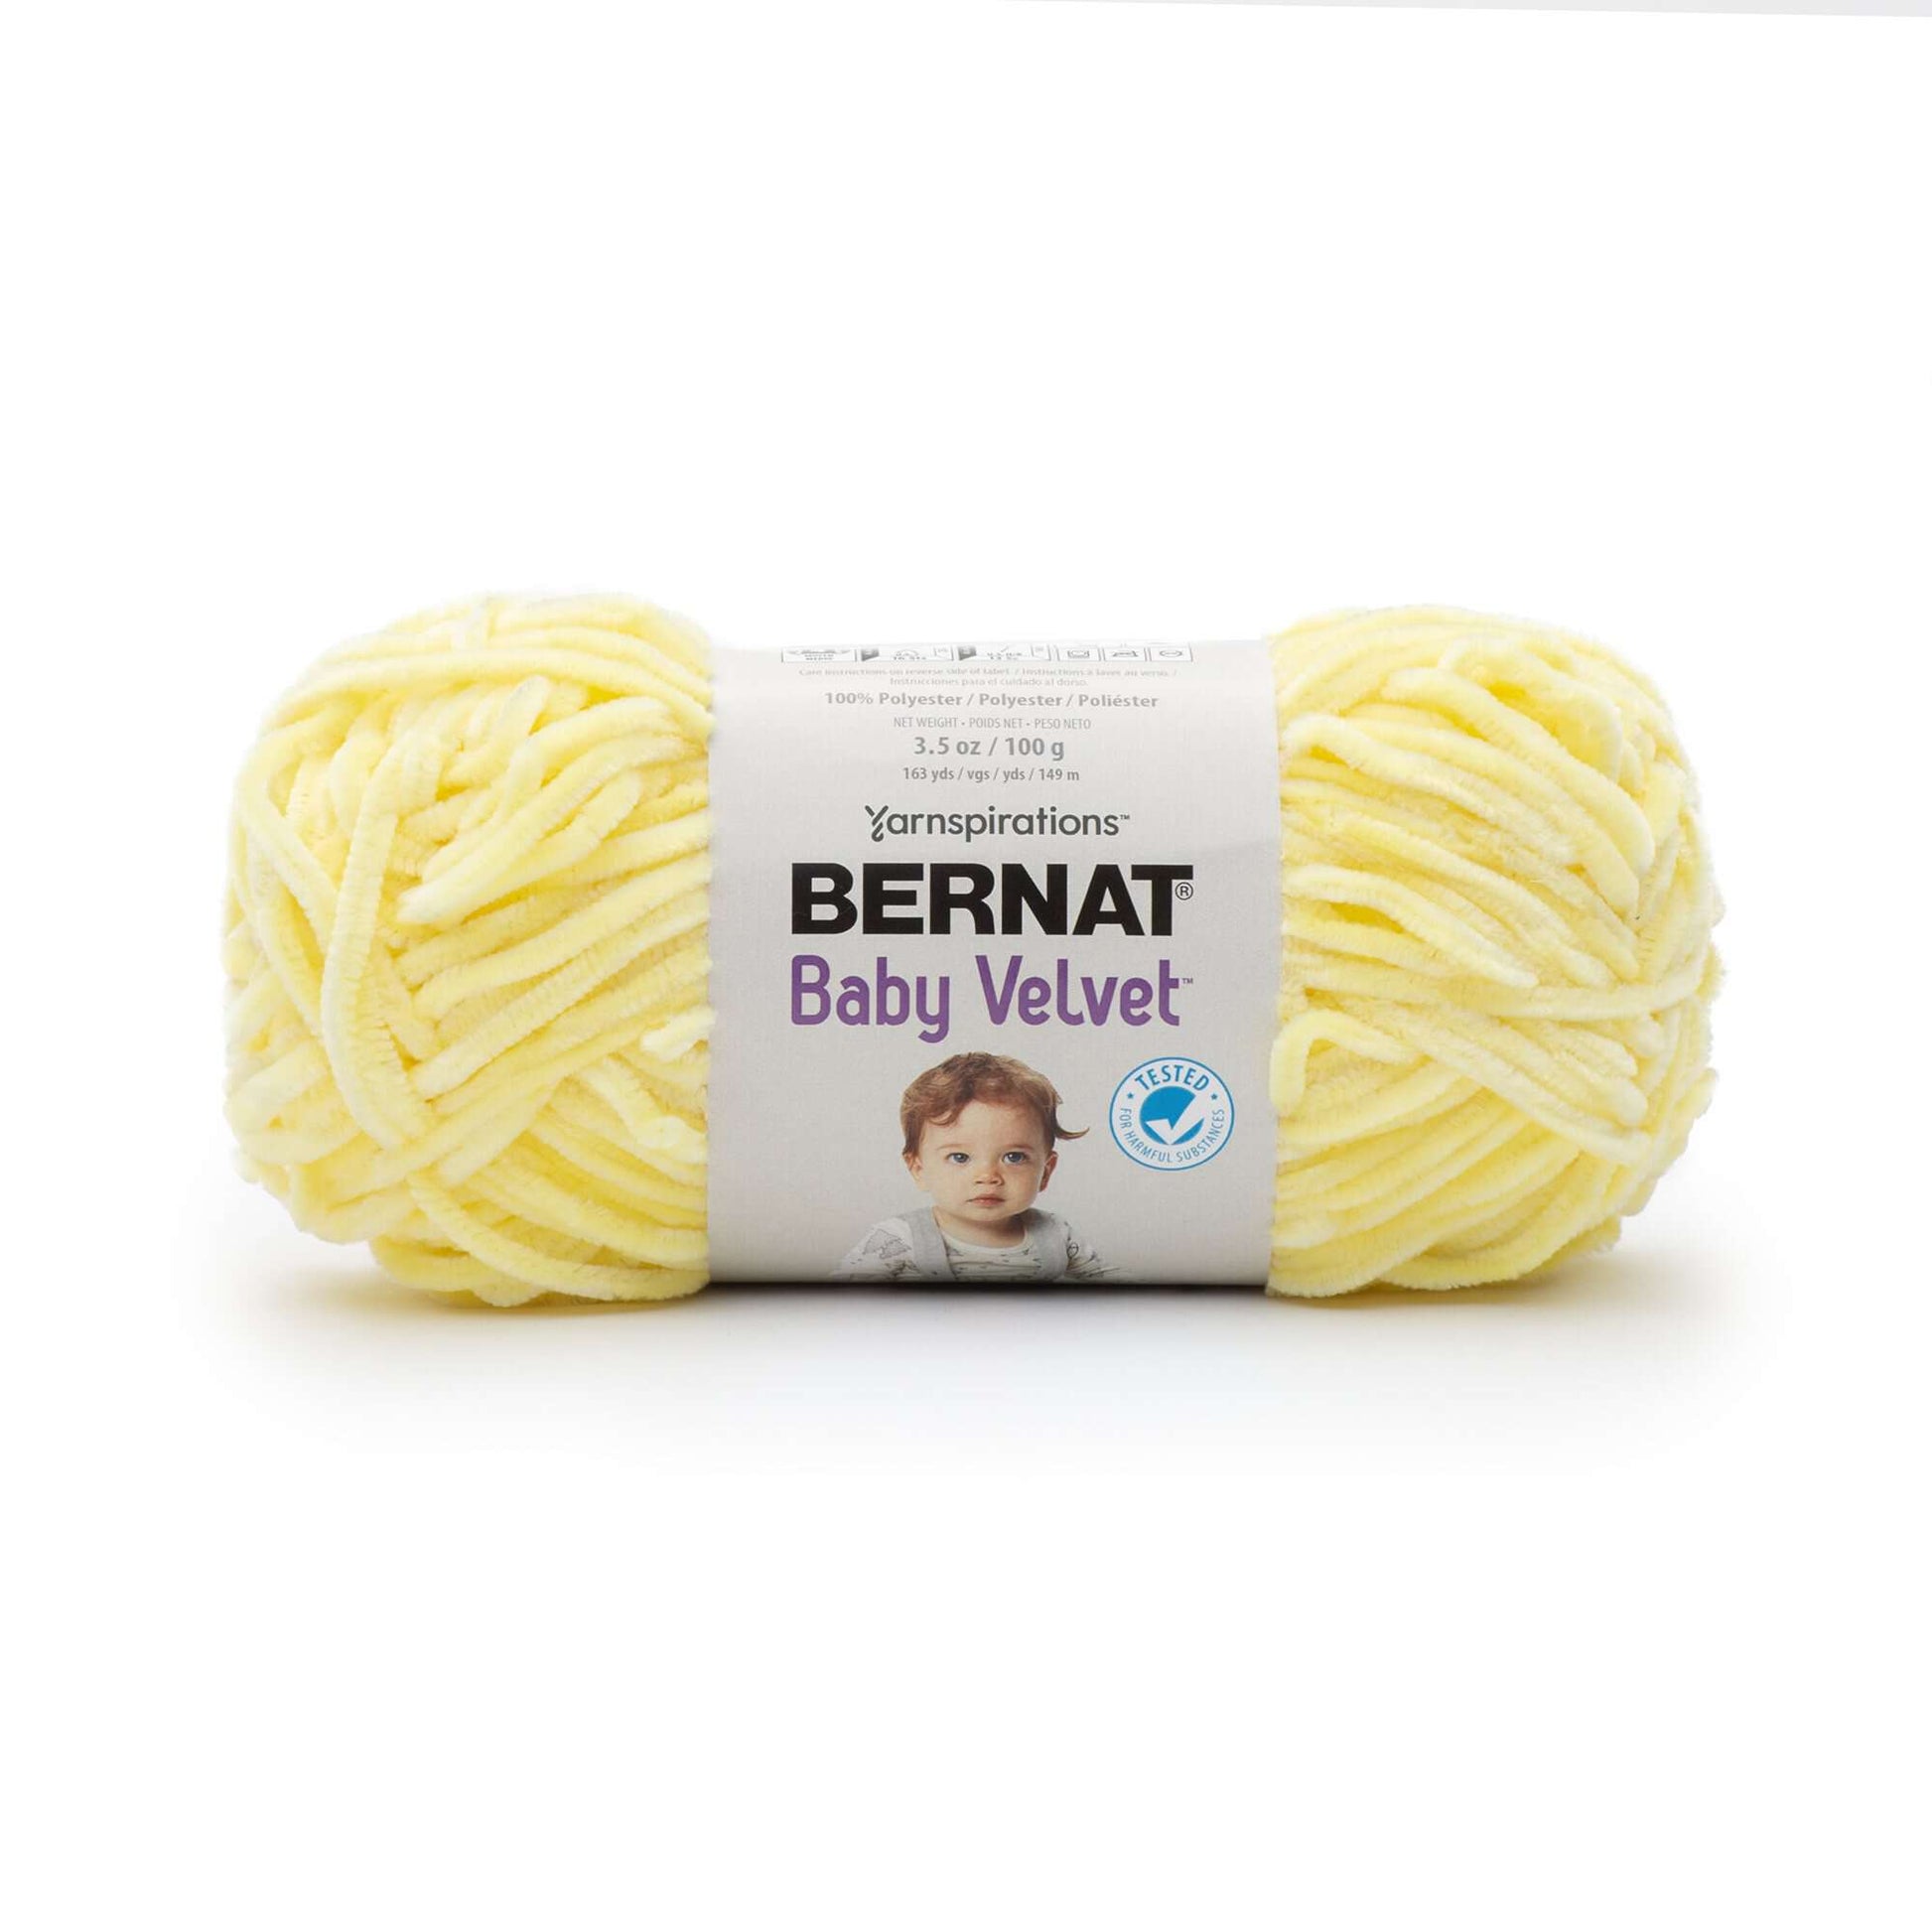 Bernat Baby Velvet Yarn - Discontinued shades